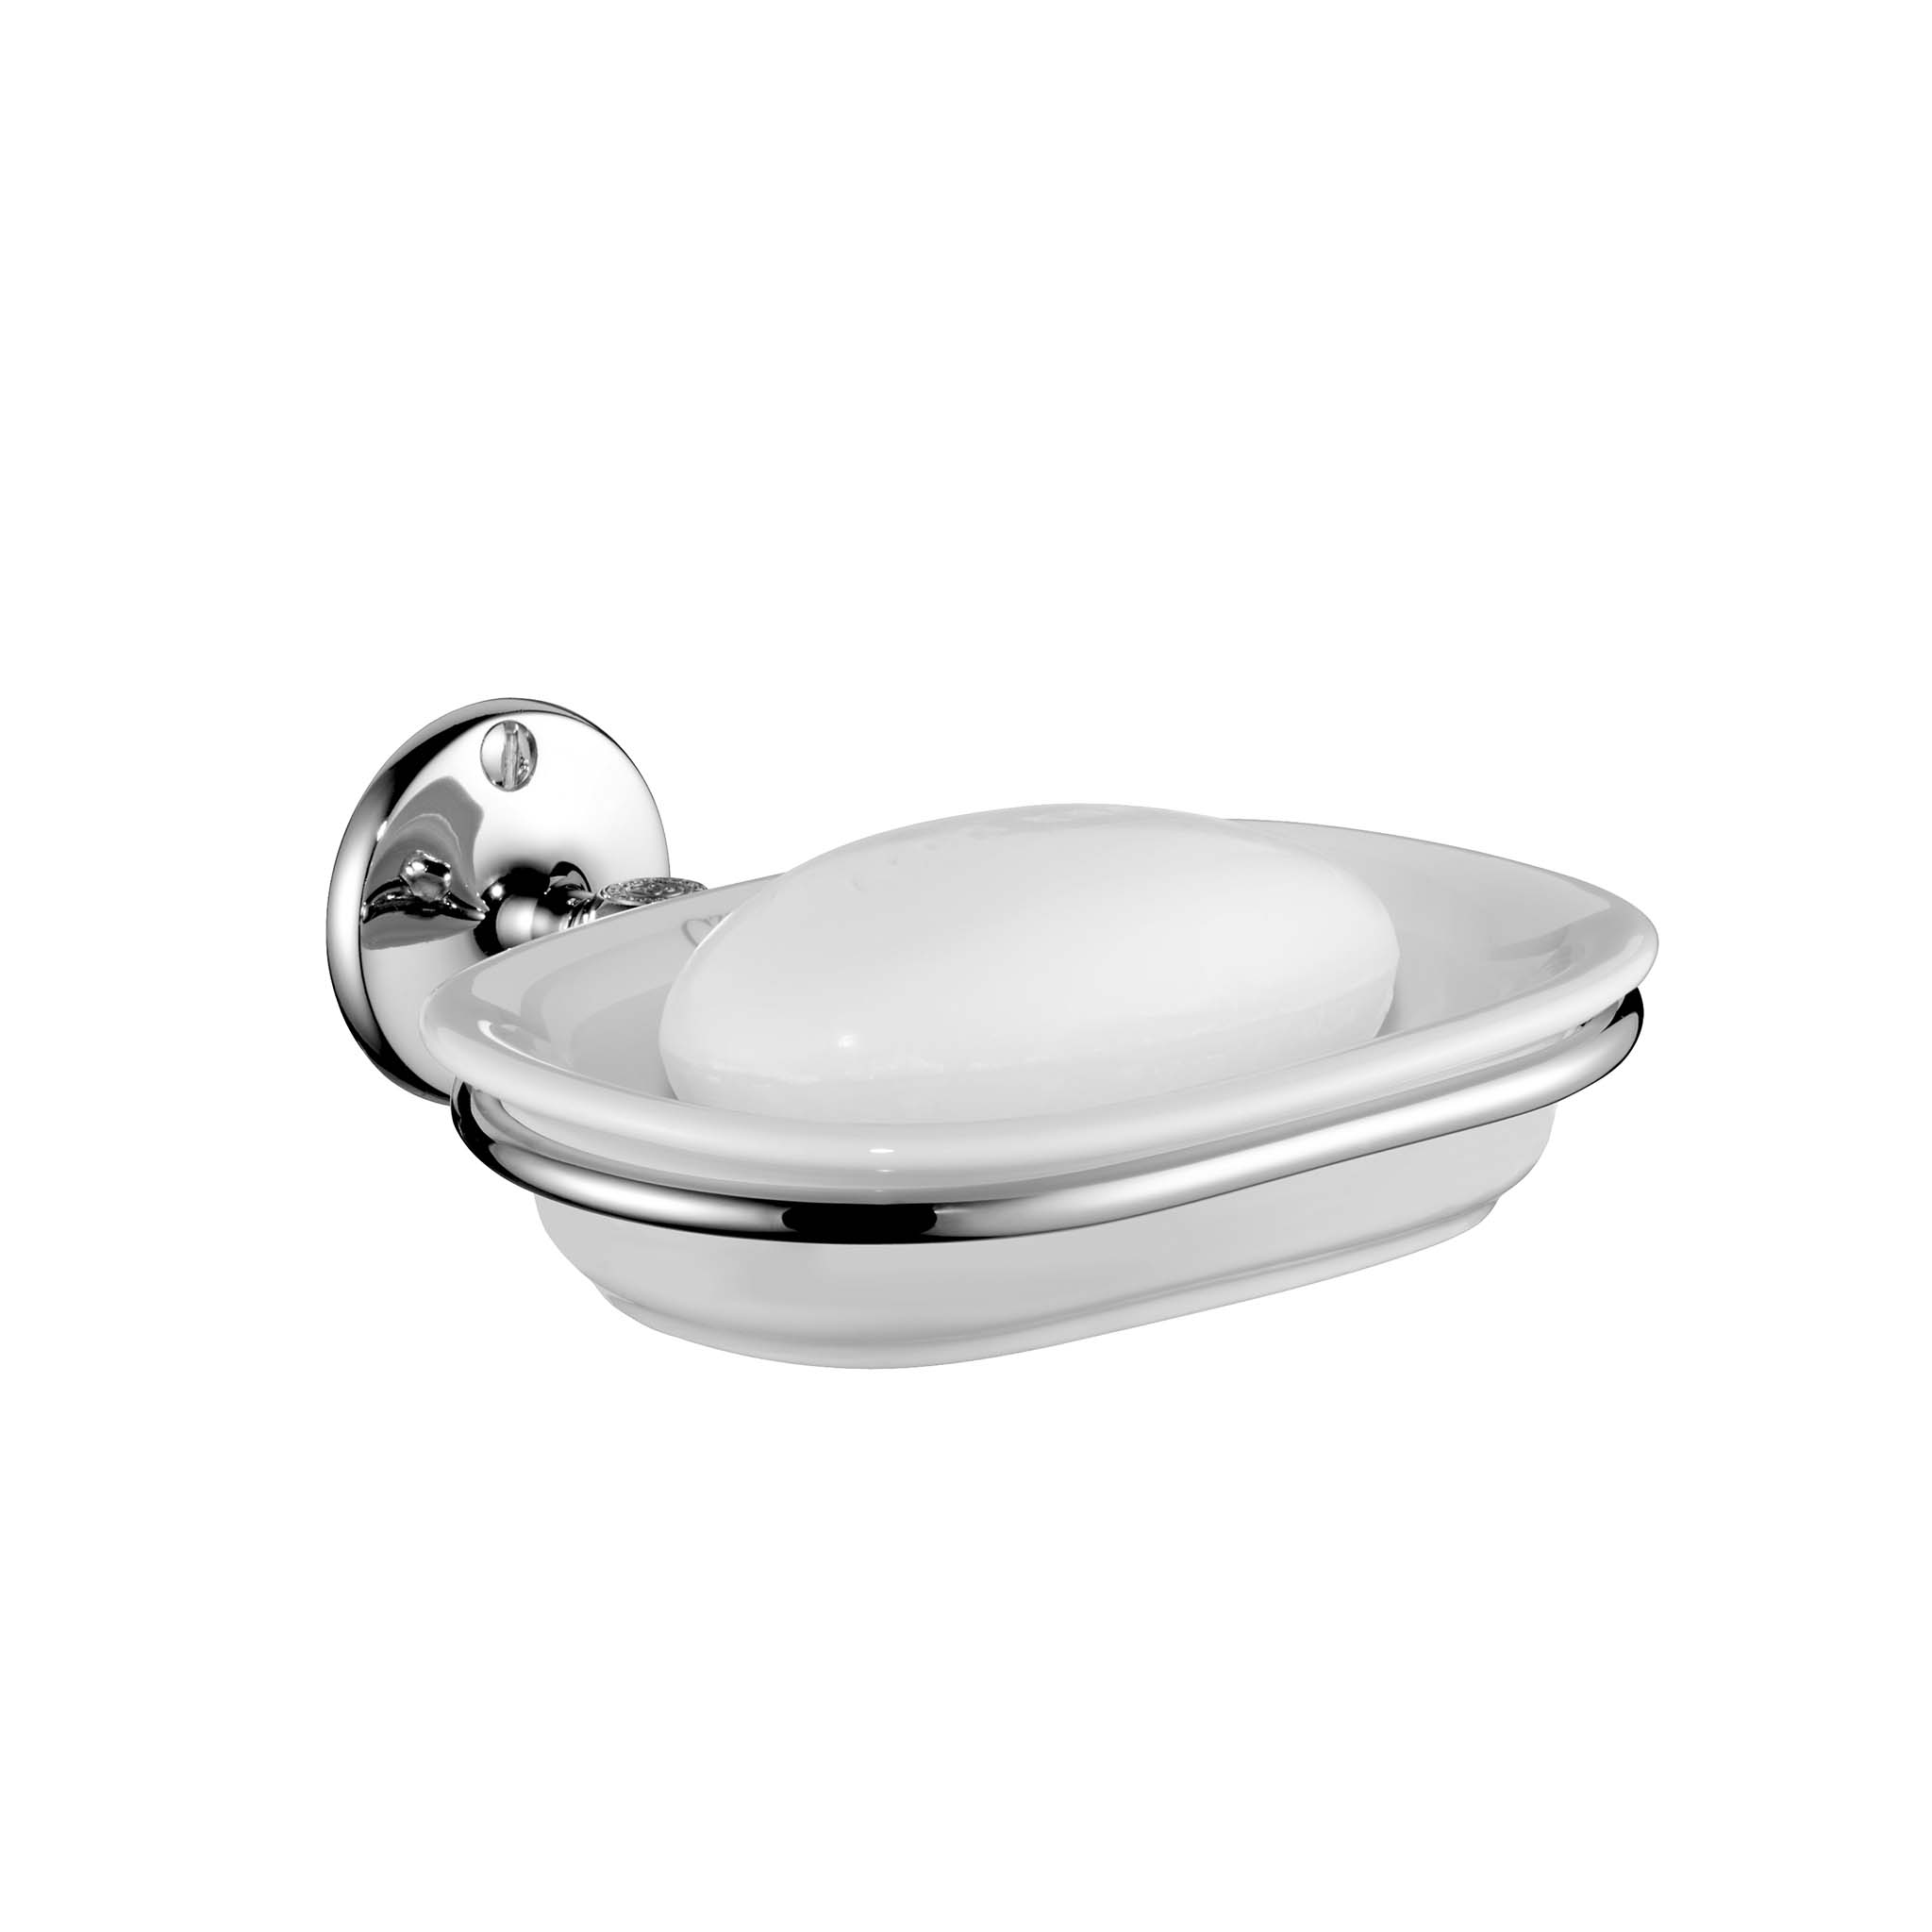 Edwardian Soap Dish - Chrome